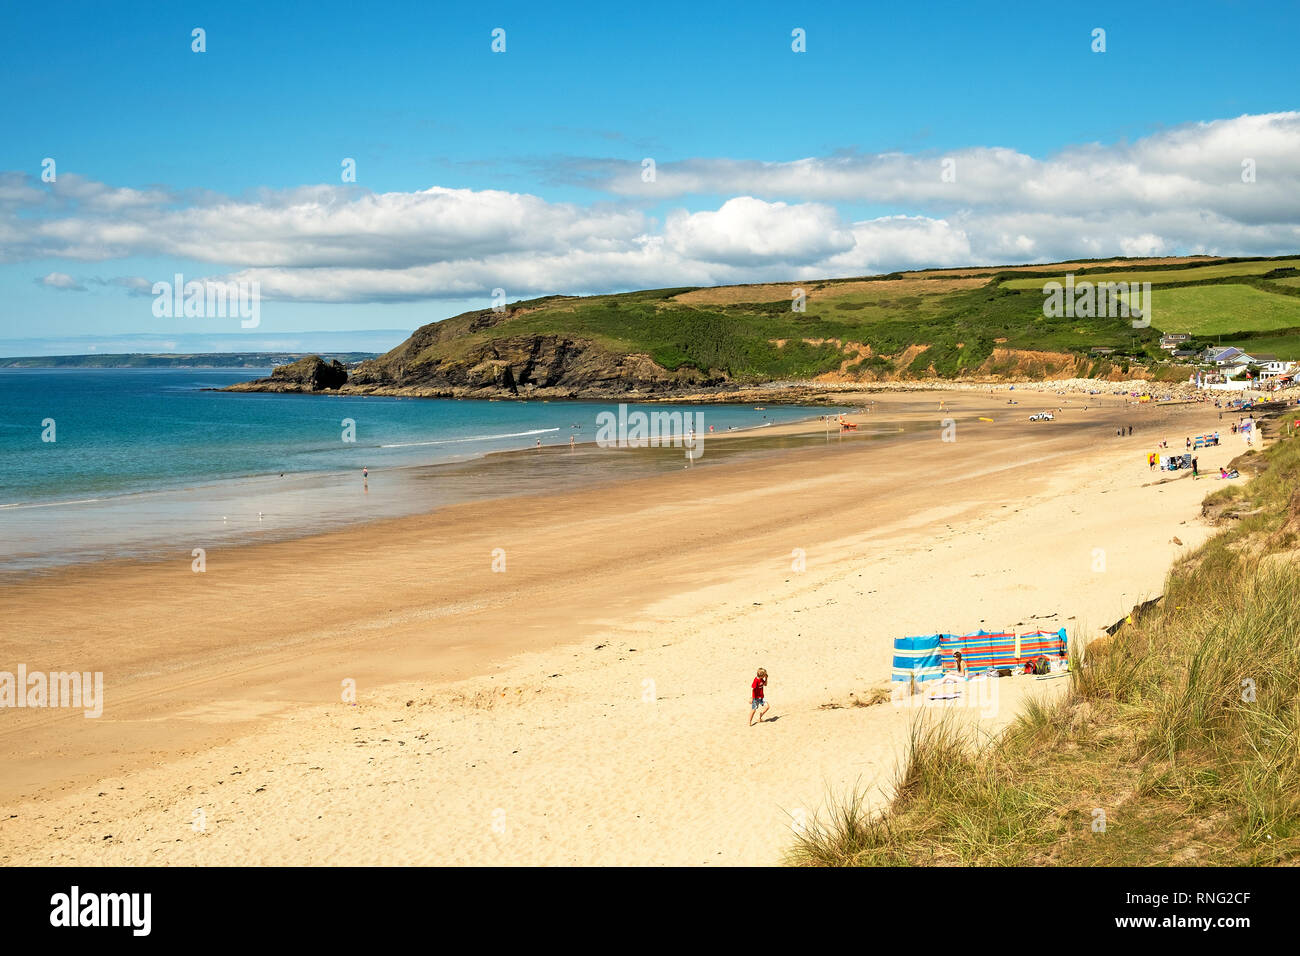 Playa de arena de praa sands, Cornwall, Inglaterra, Gran Bretaña, Reino Unido, Foto de stock